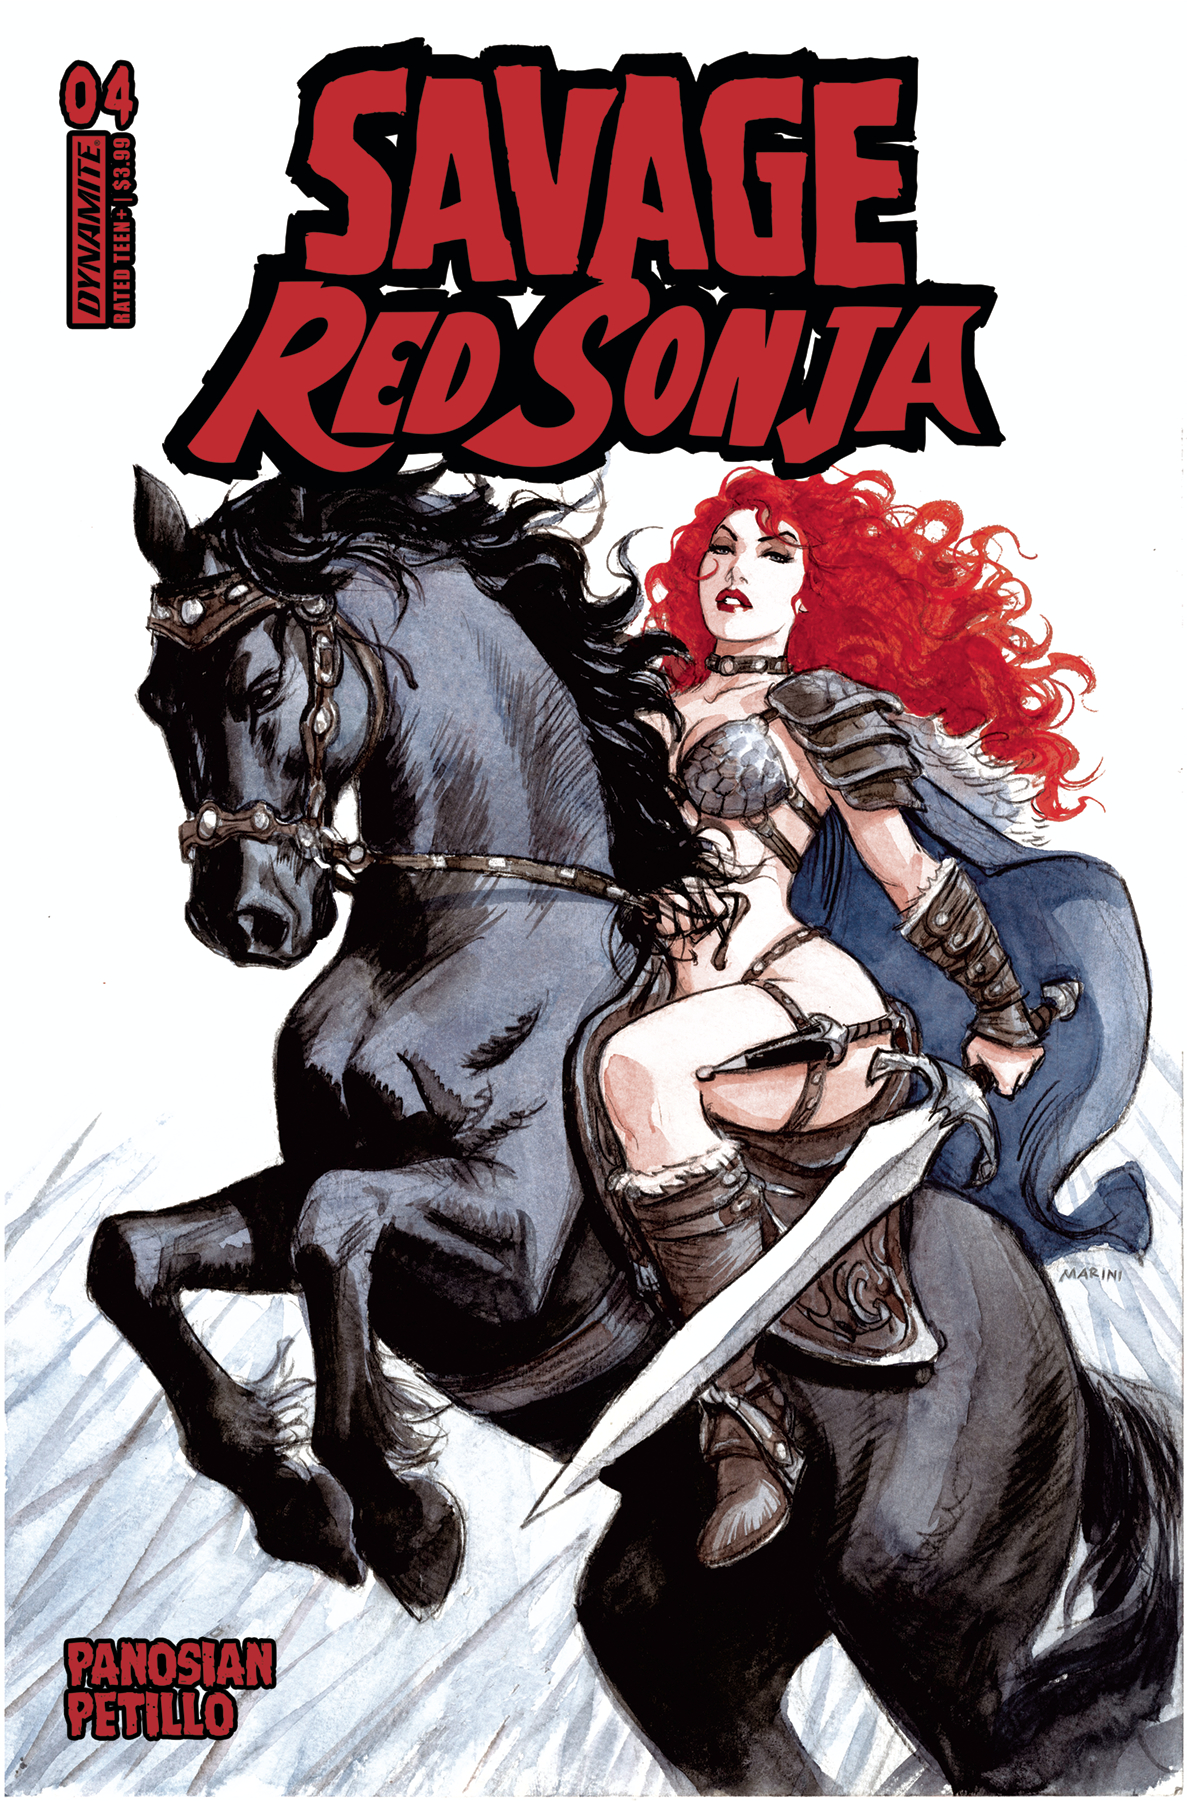 Savage Red Sonja #4 Cover C Marini